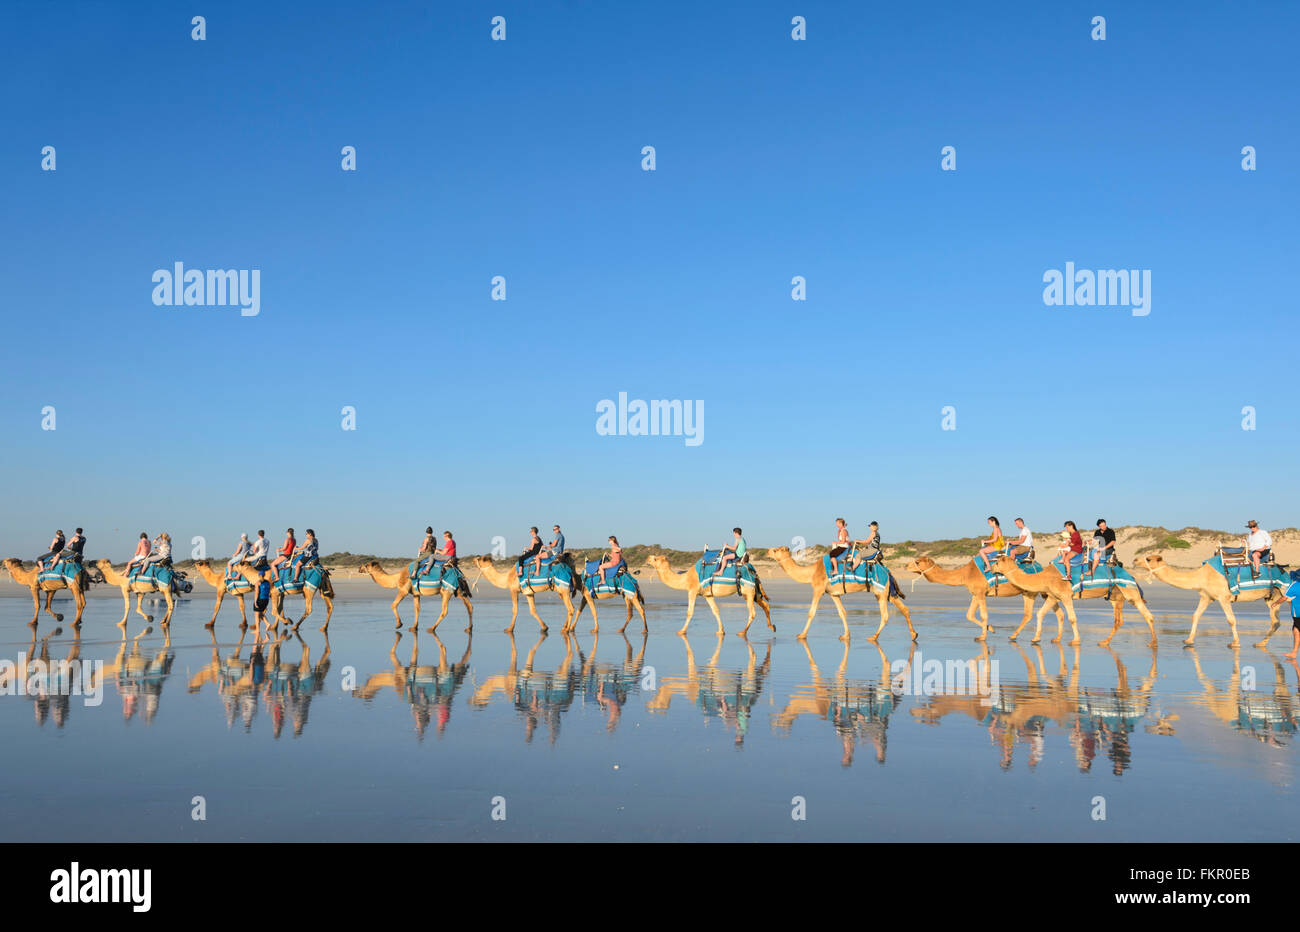 Tourist camel train on Cable Beach at sunset, Broome, Kimberley Region, Western Australia, WA, Australia Stock Photo